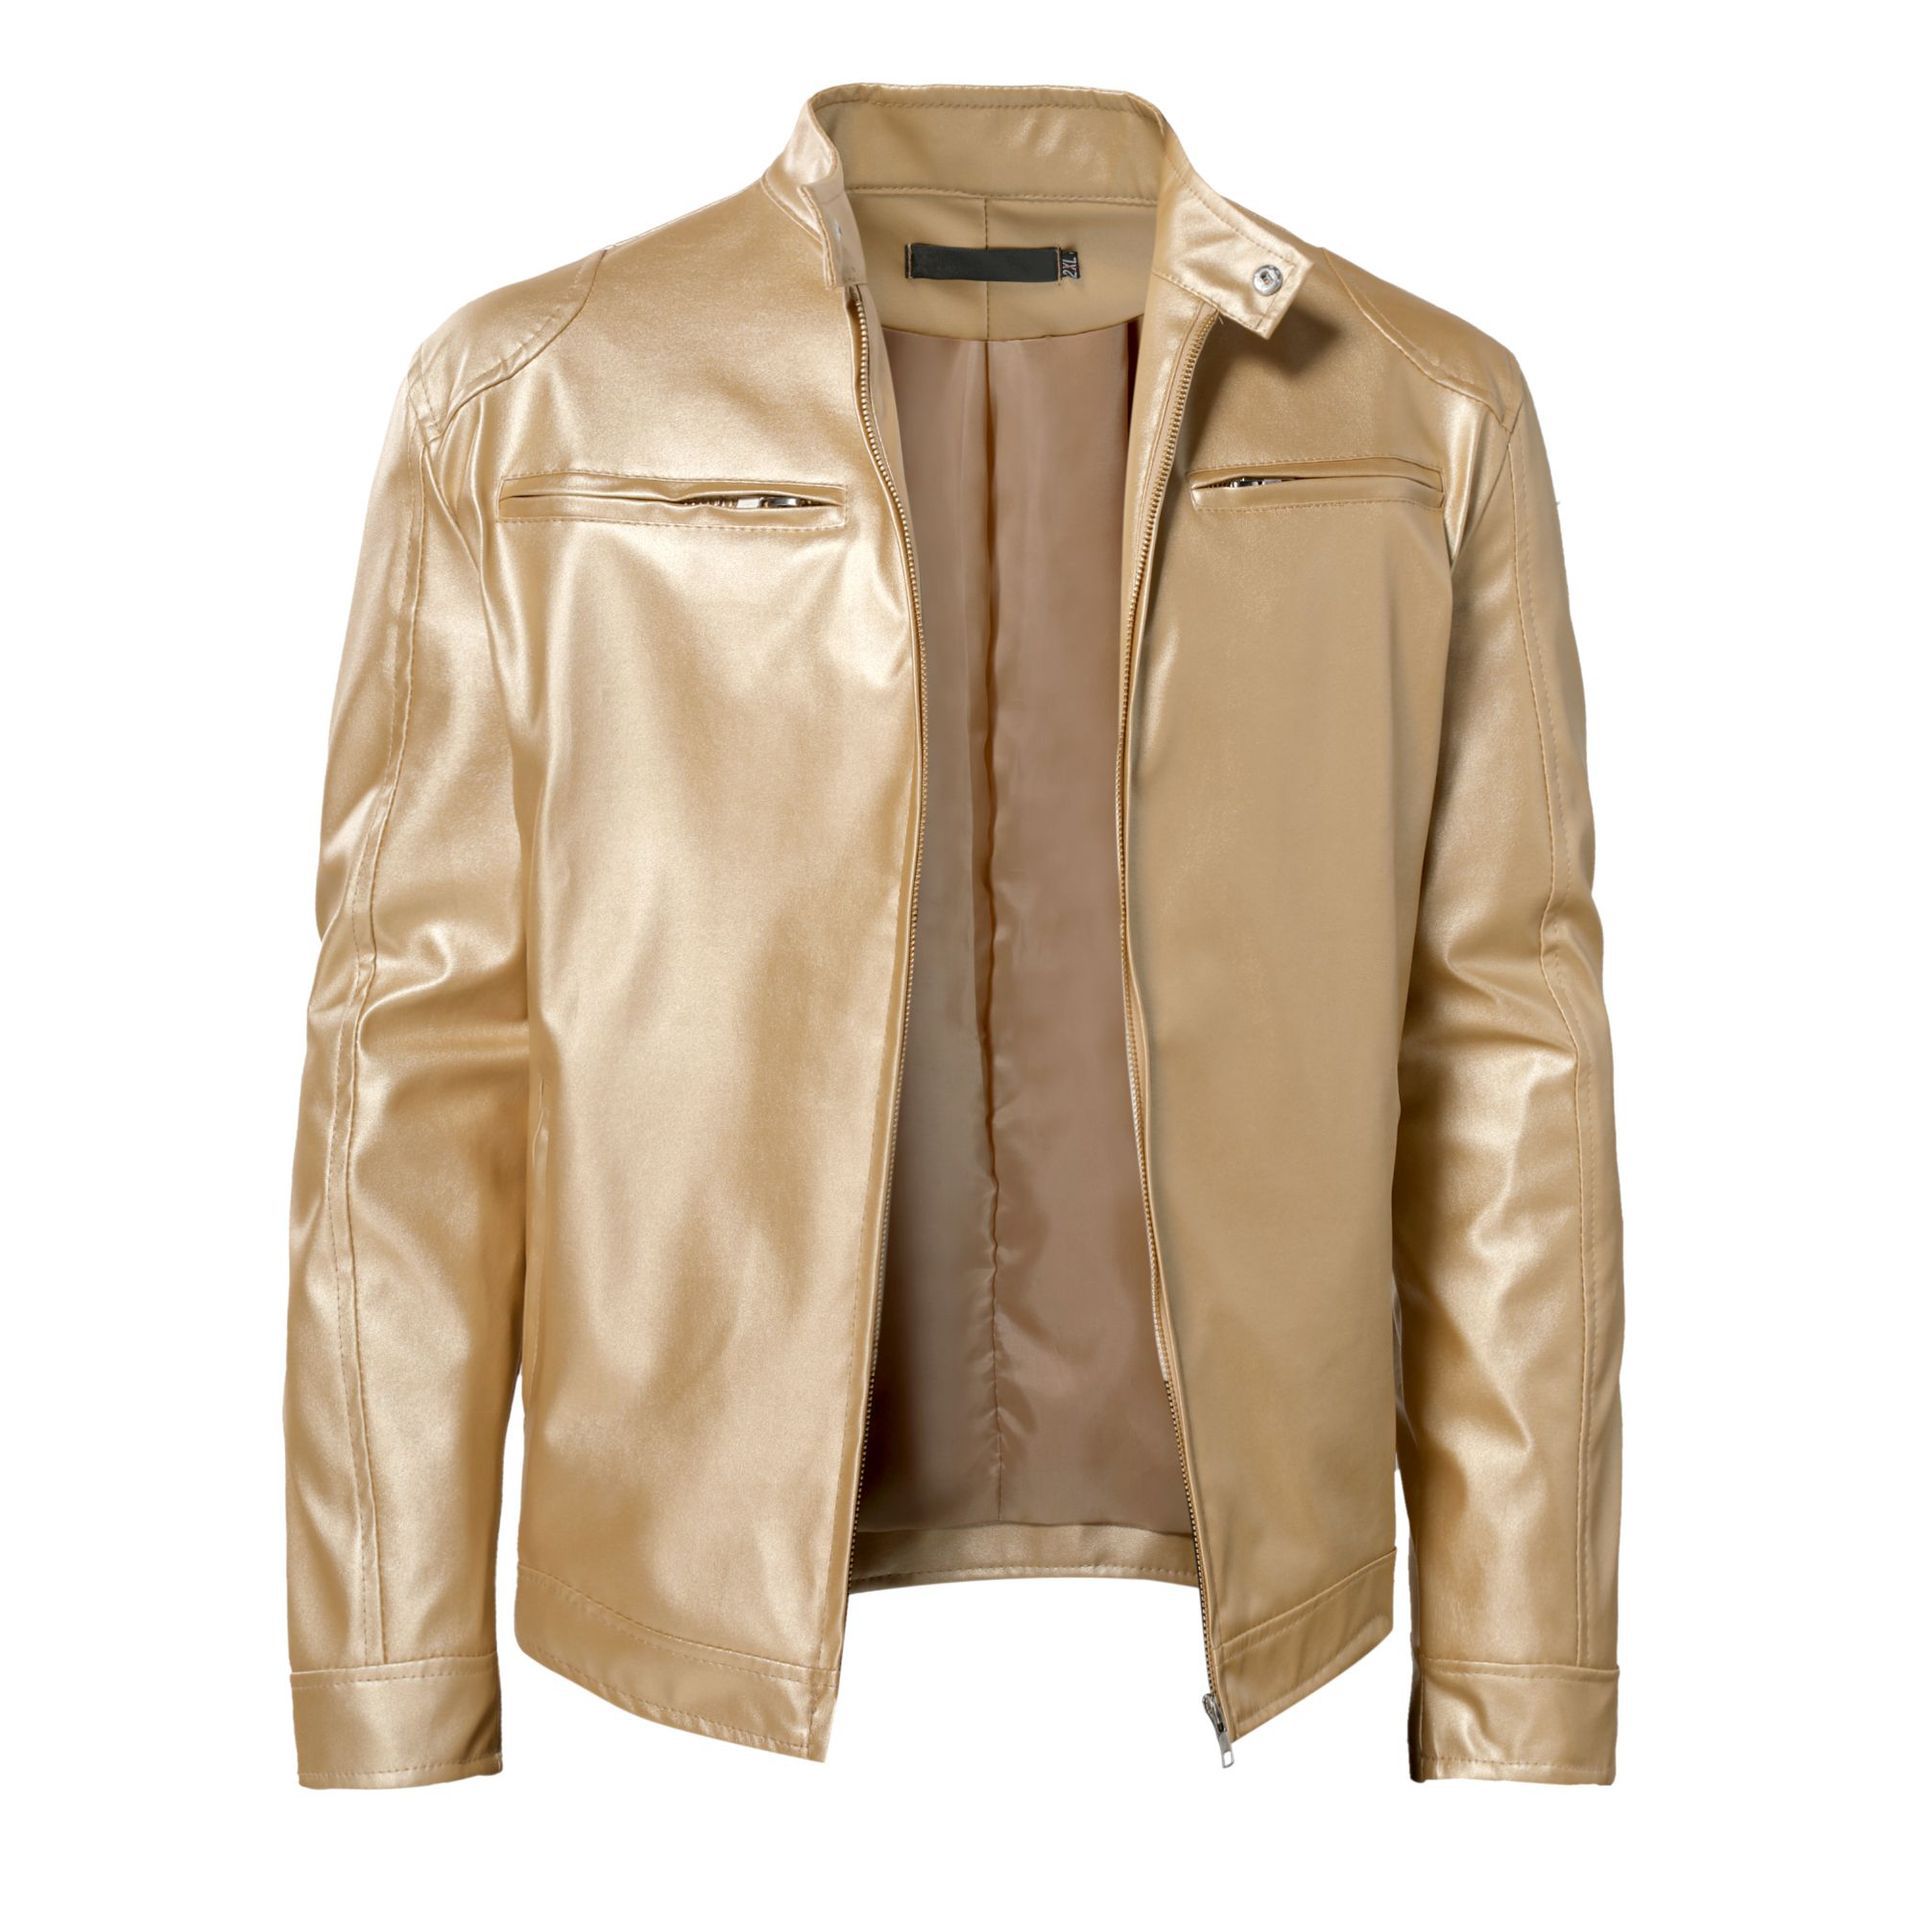 Men's warm zip cardigan pocket leather standing collar slim leather jacket